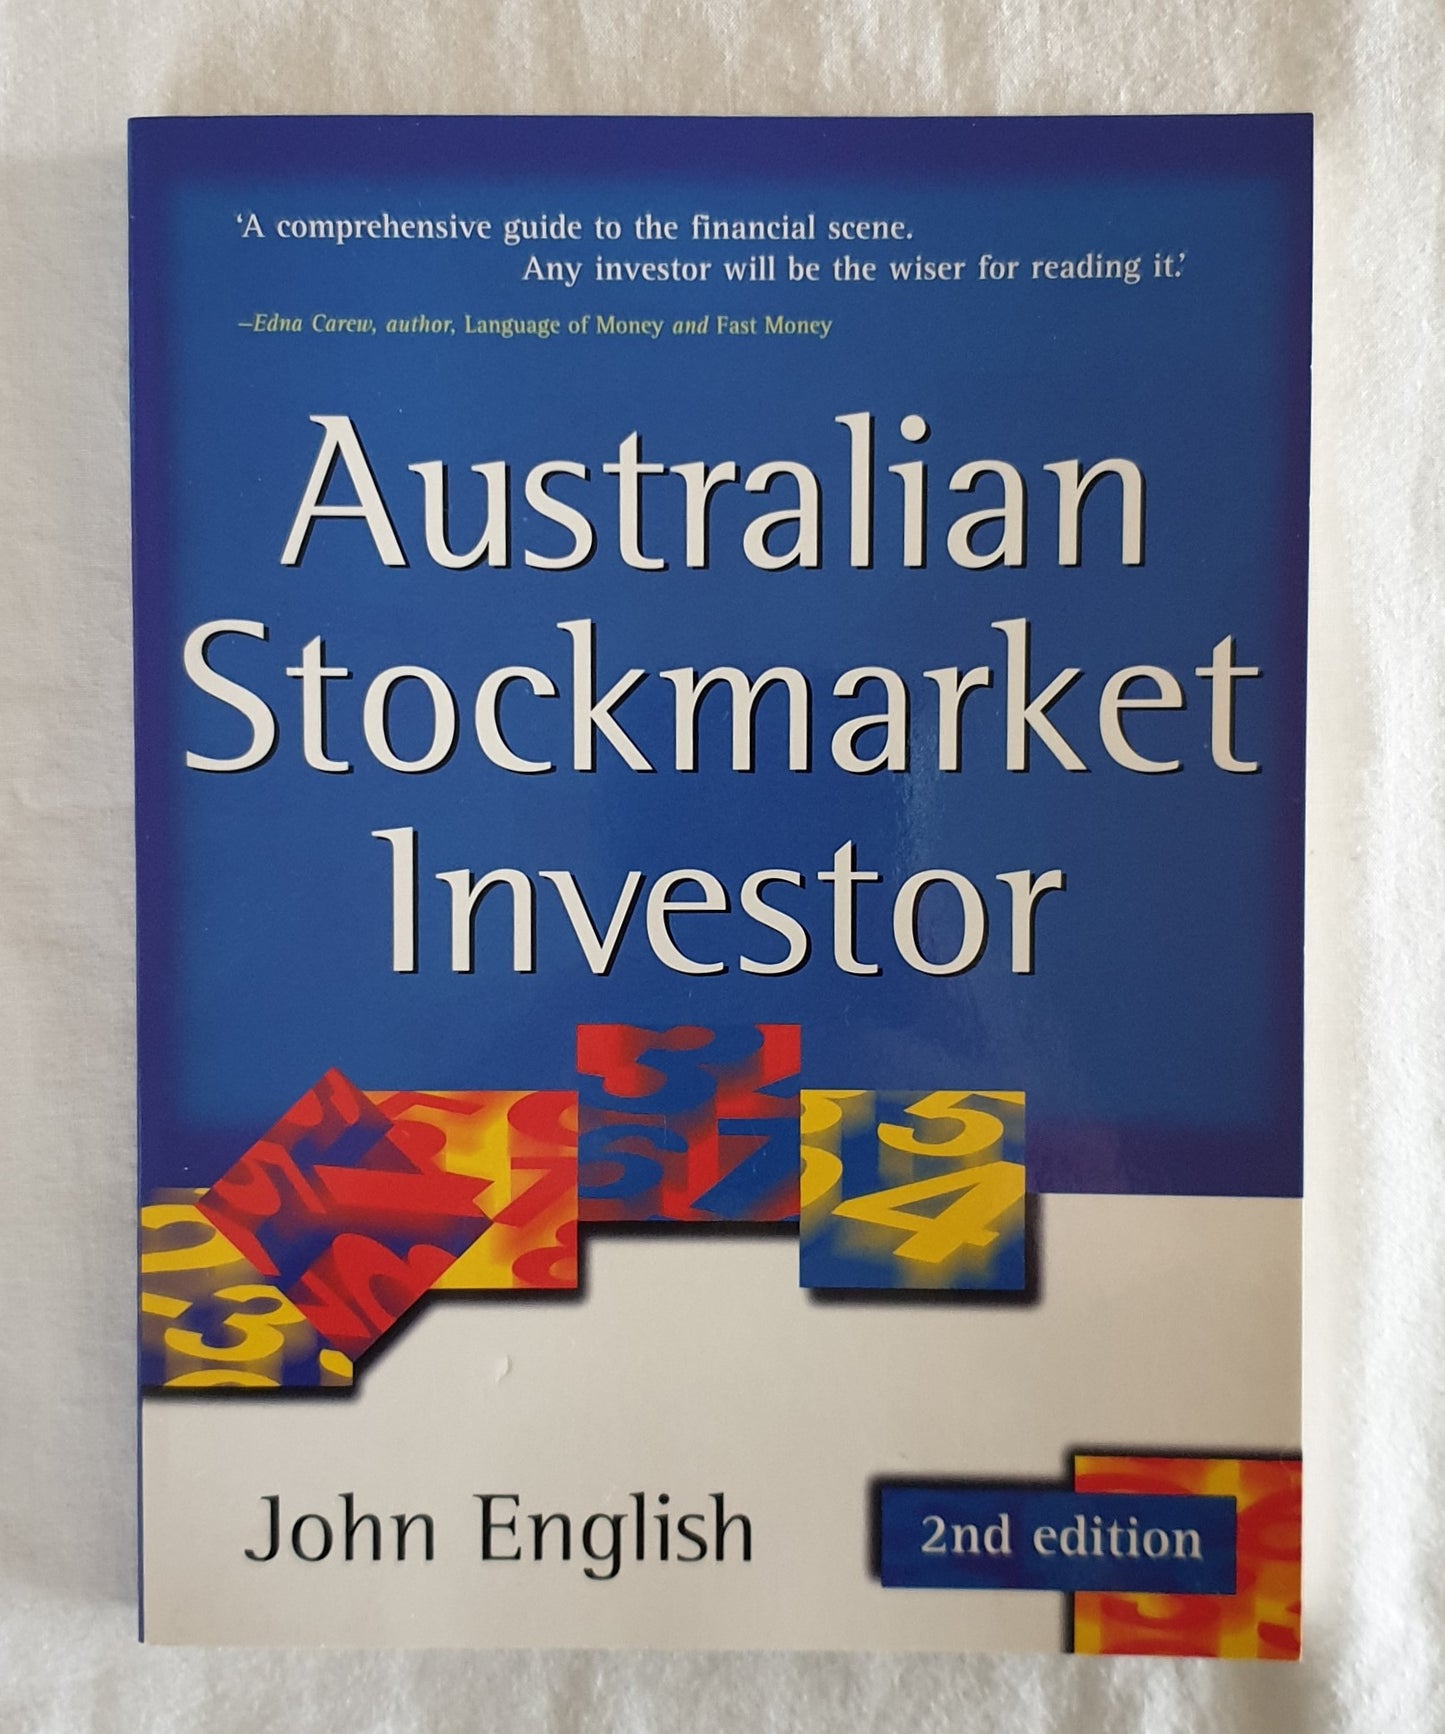 Australian Stockmarket Investor by John English